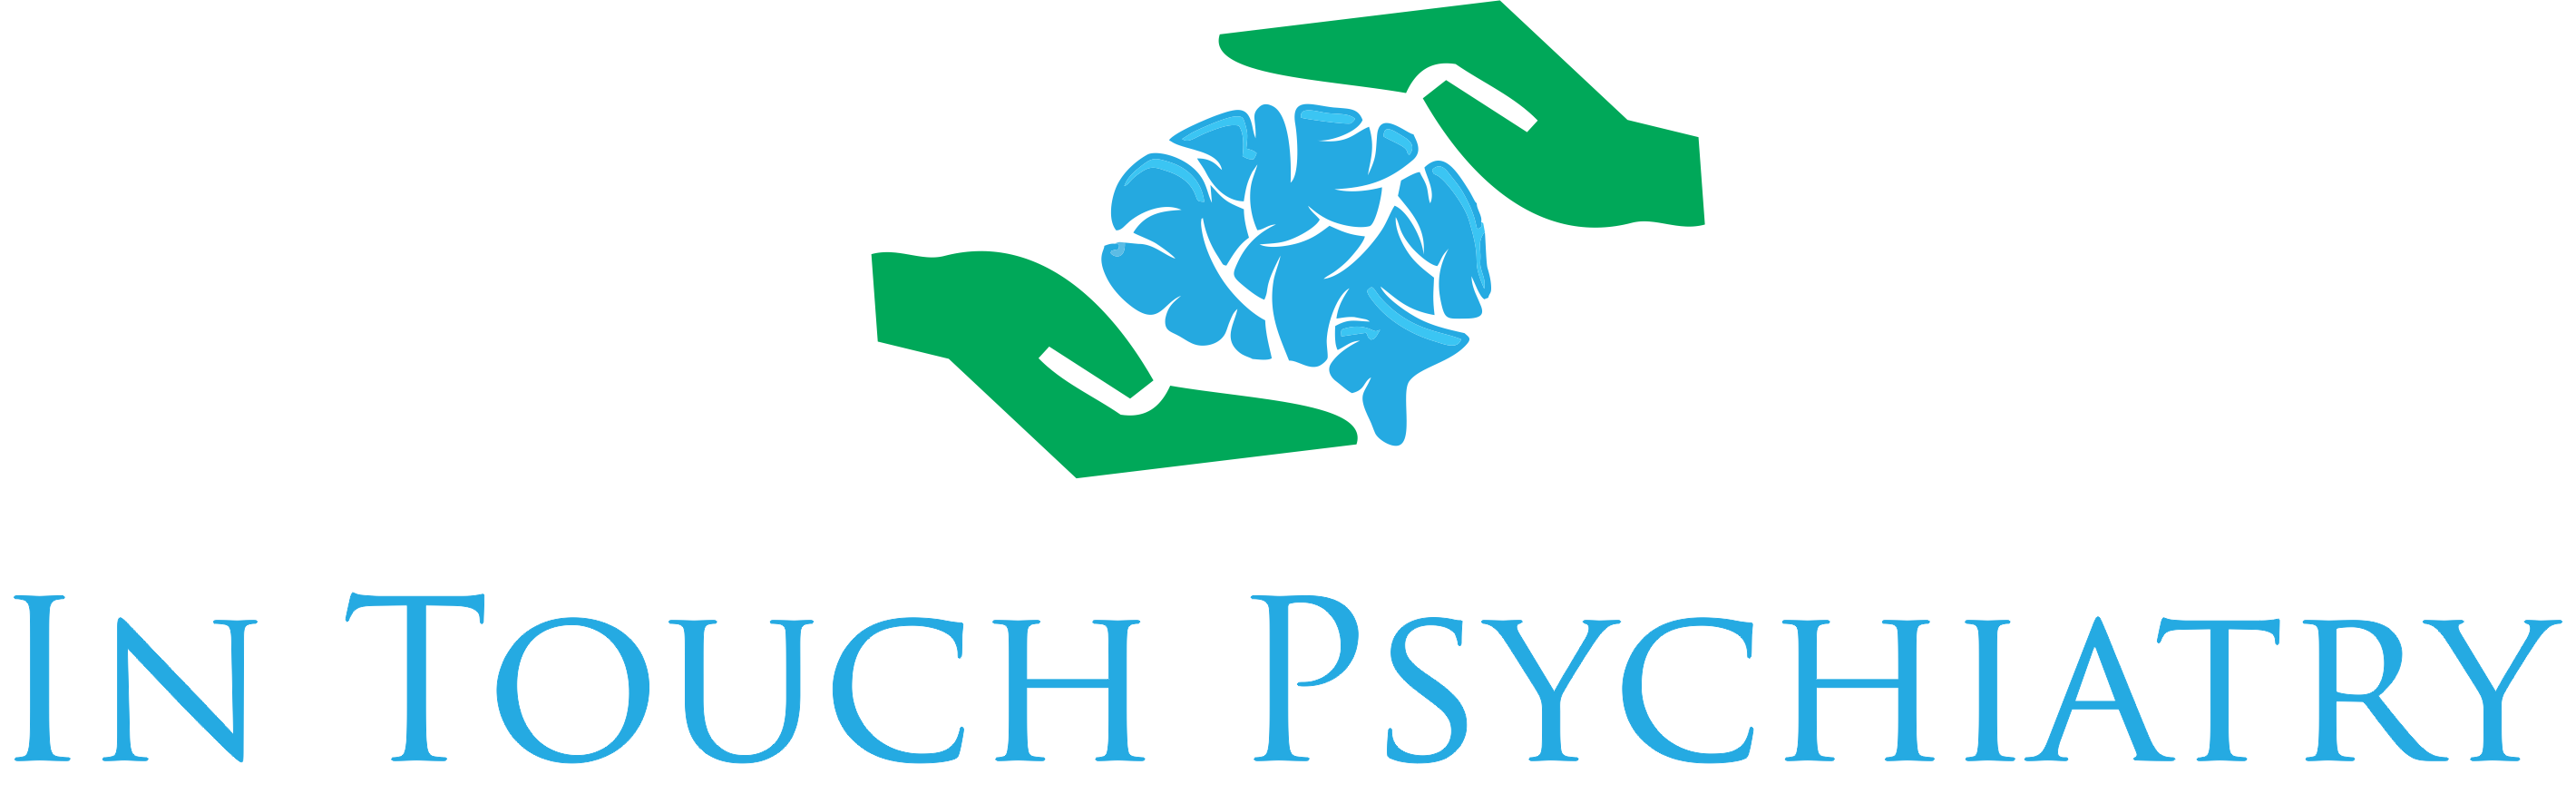 In Touch Psychiatry